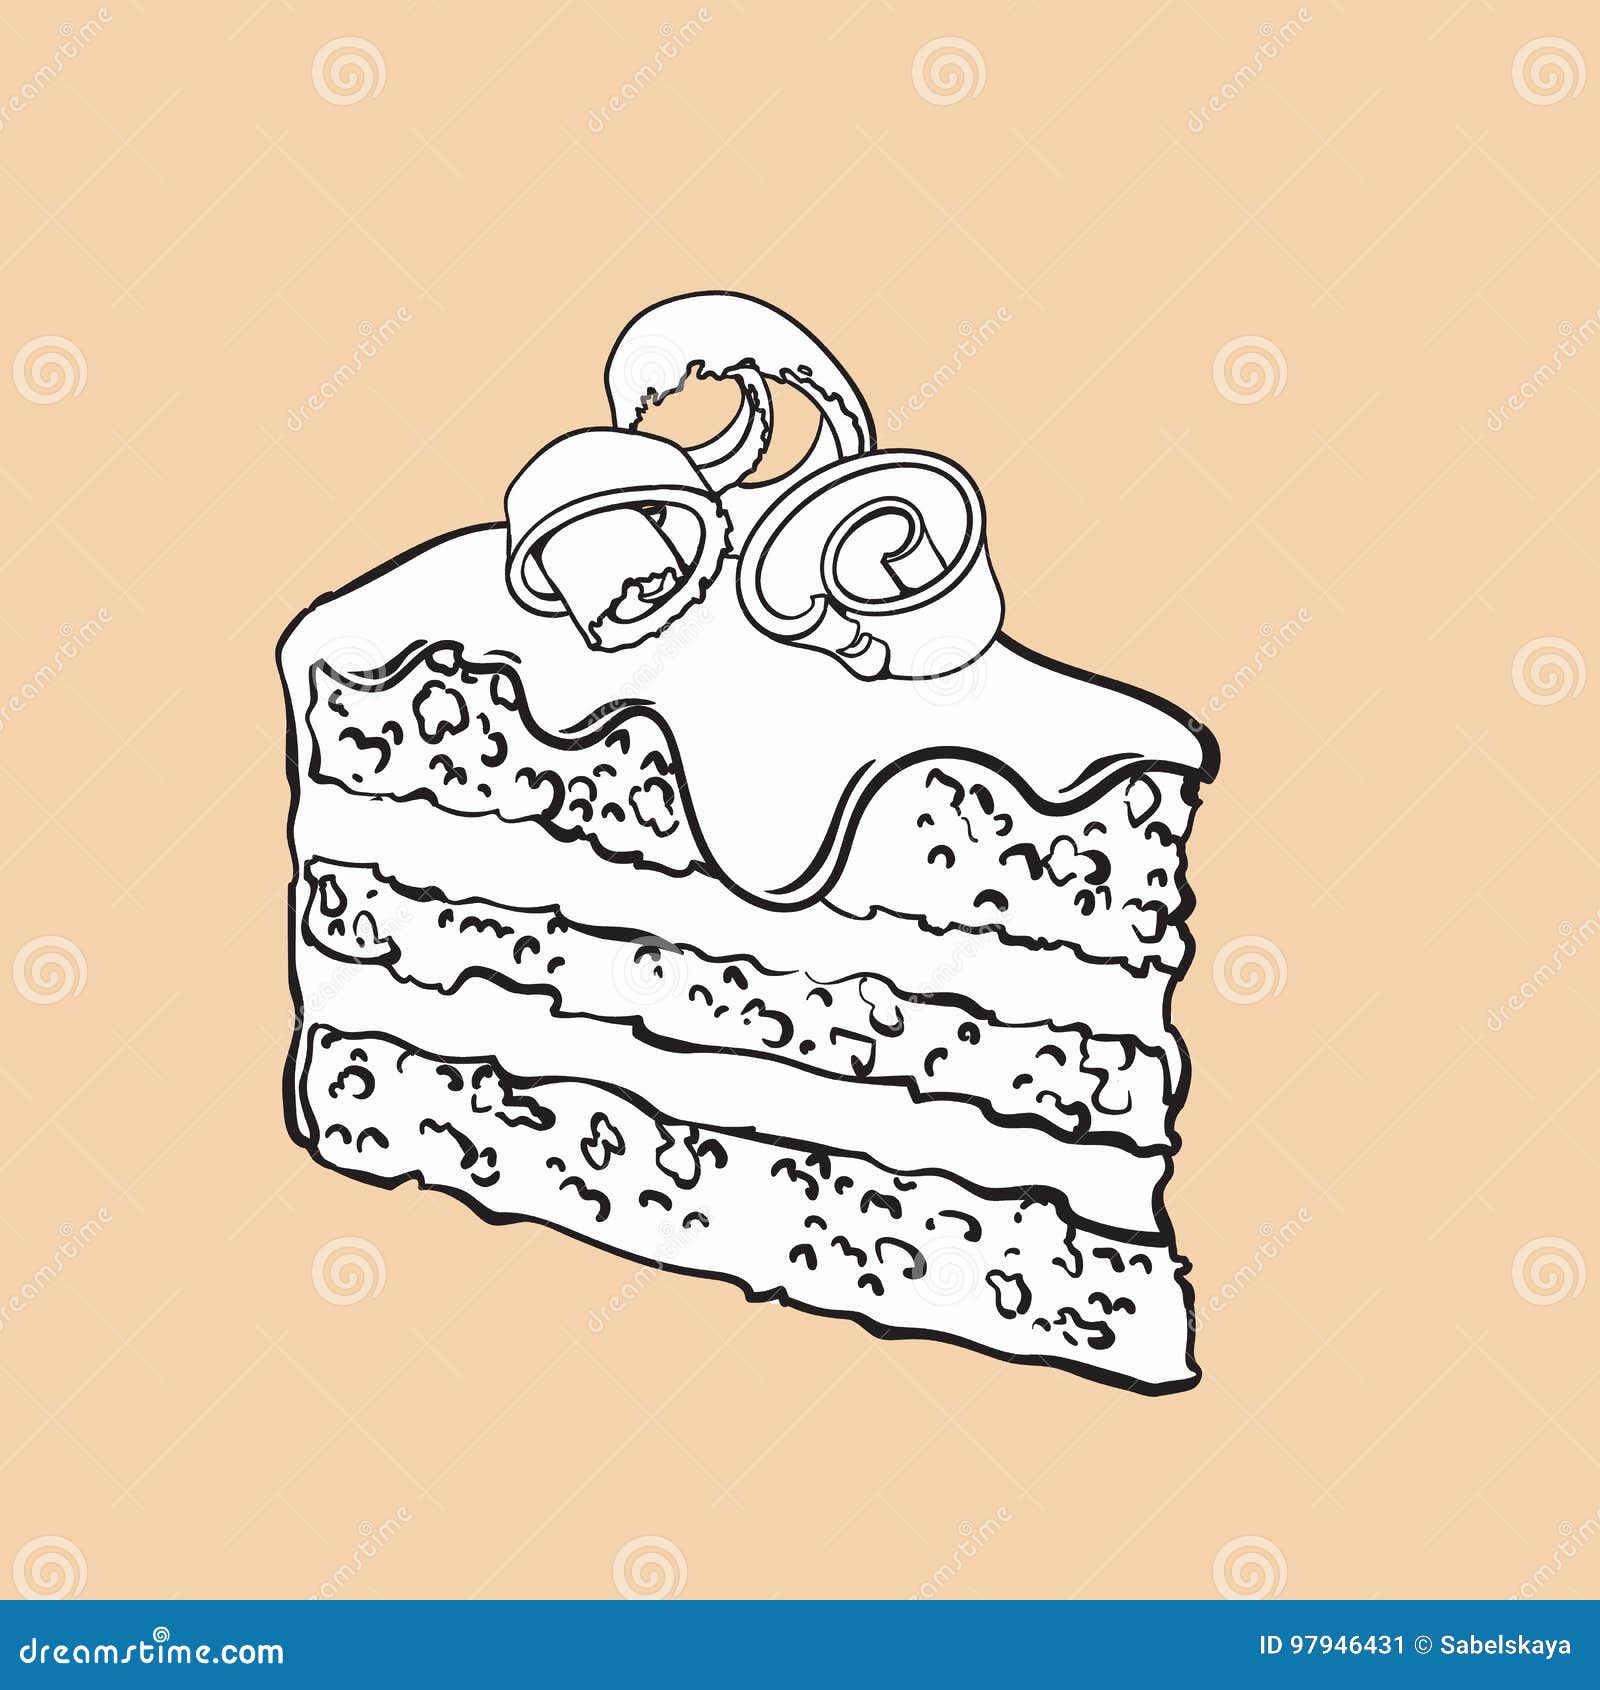 How to Draw a Slice of Cake Kawaii Style  FeltMagnet